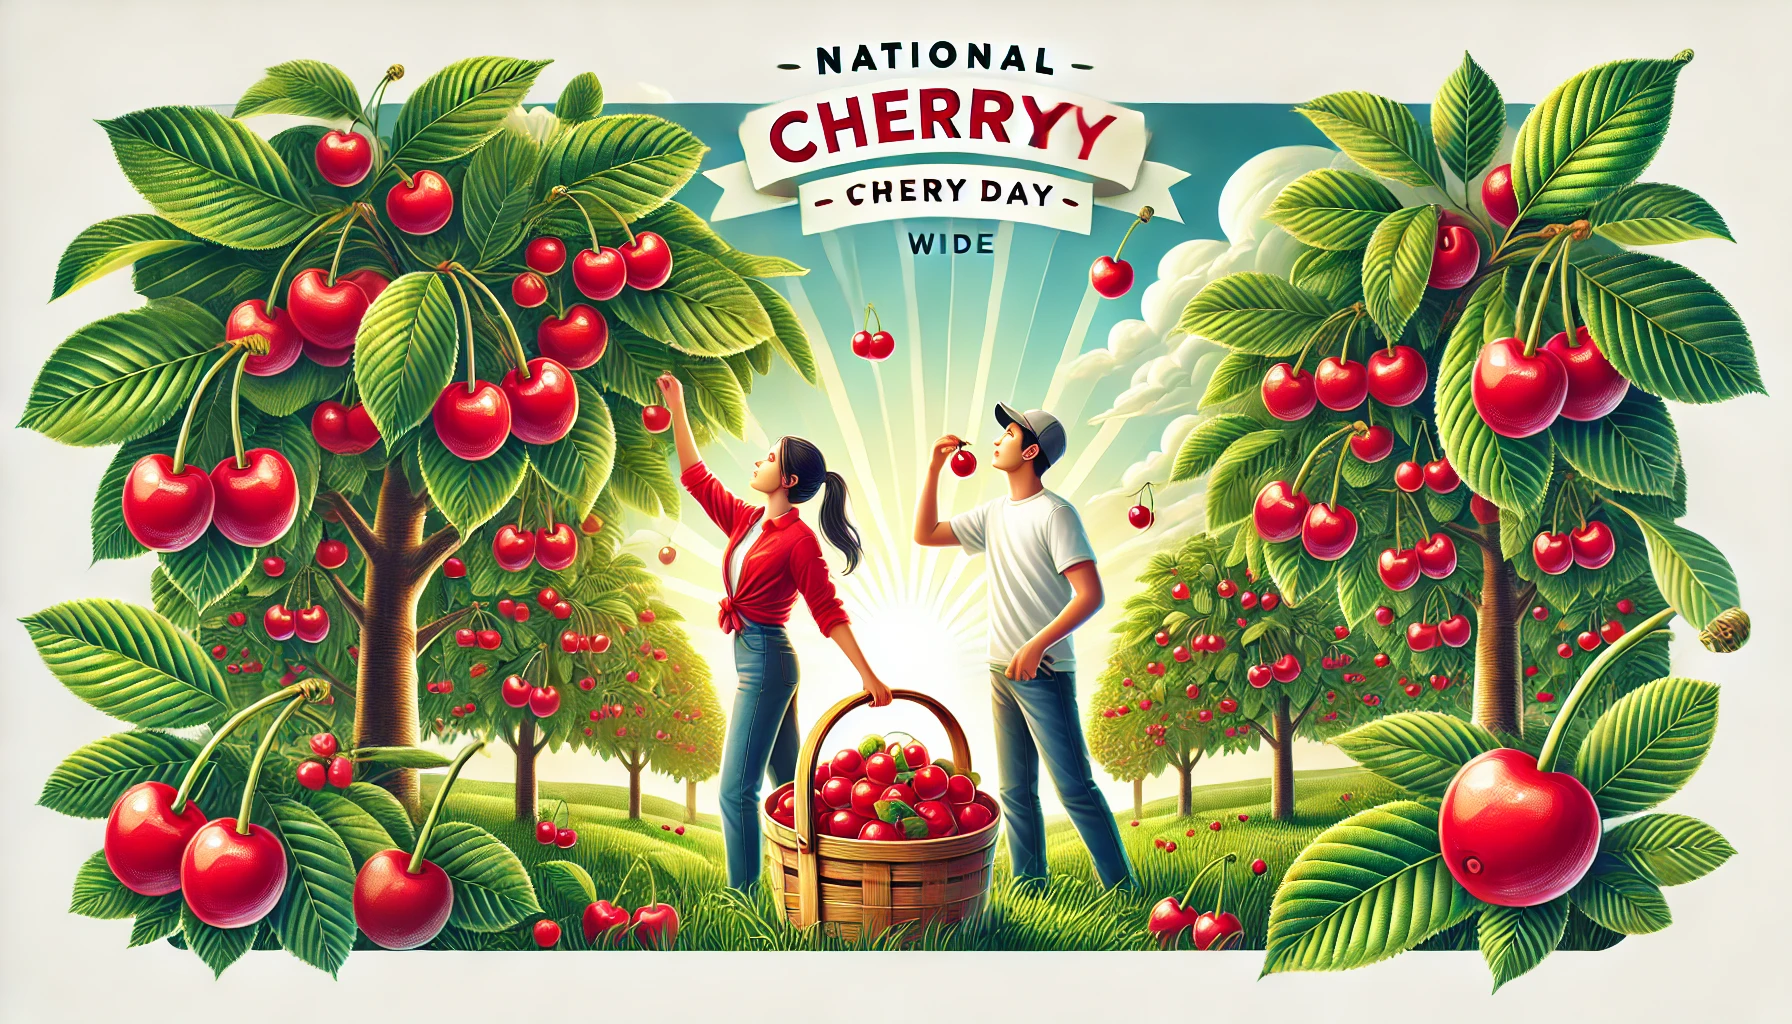 National Cherry Day